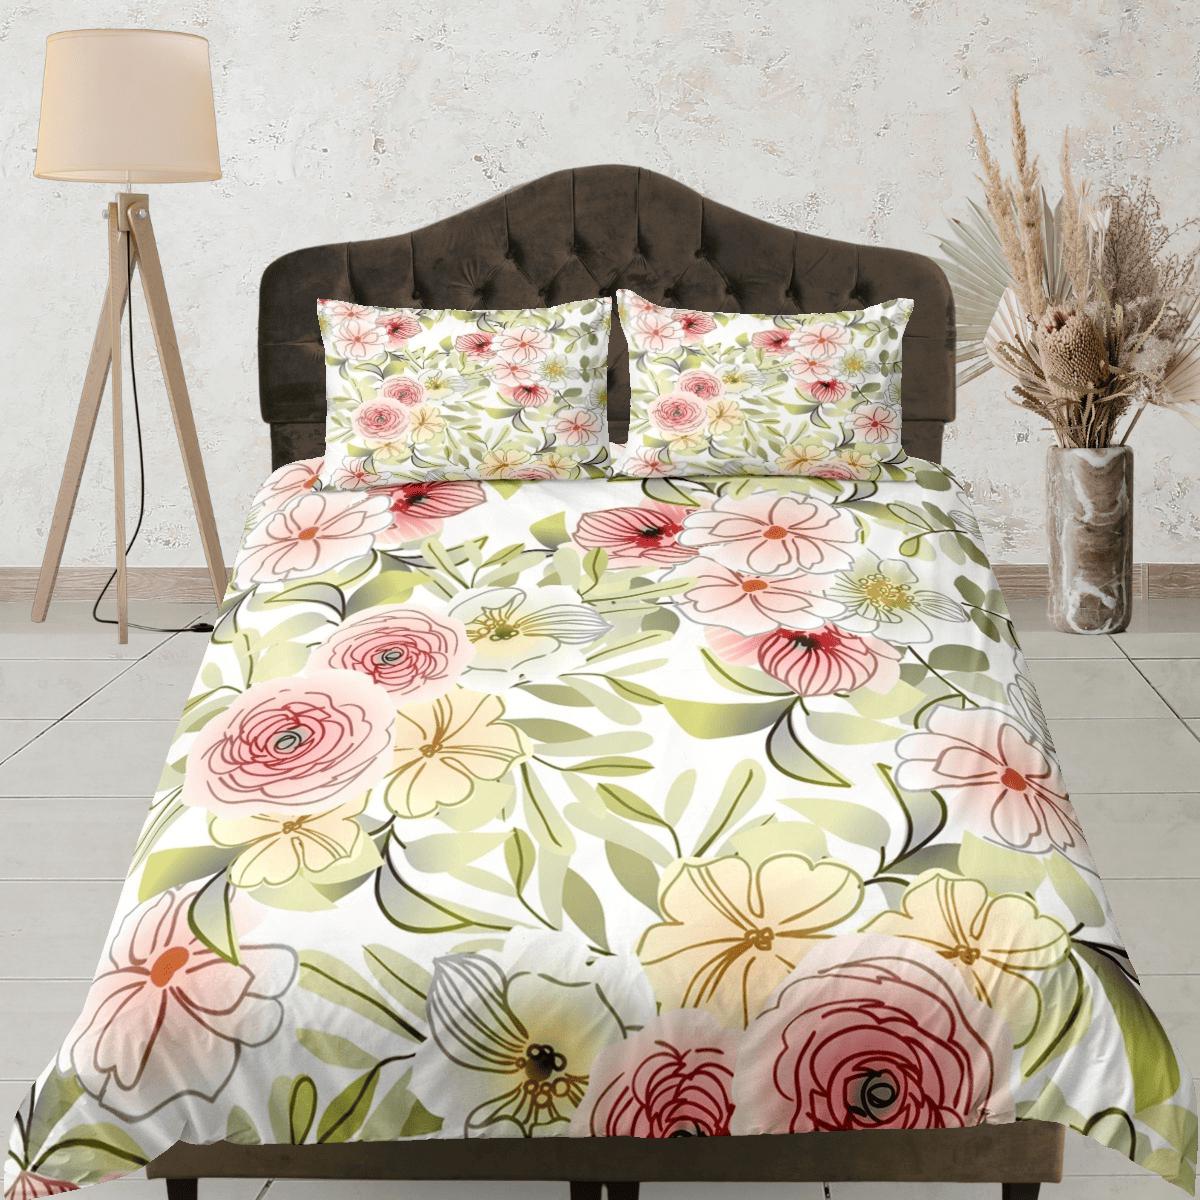 daintyduvet Dainty garden biophilic bedding, floral printed duvet cover queen, king, boho duvet, designer bedding, aesthetic bedding, maximalist decor